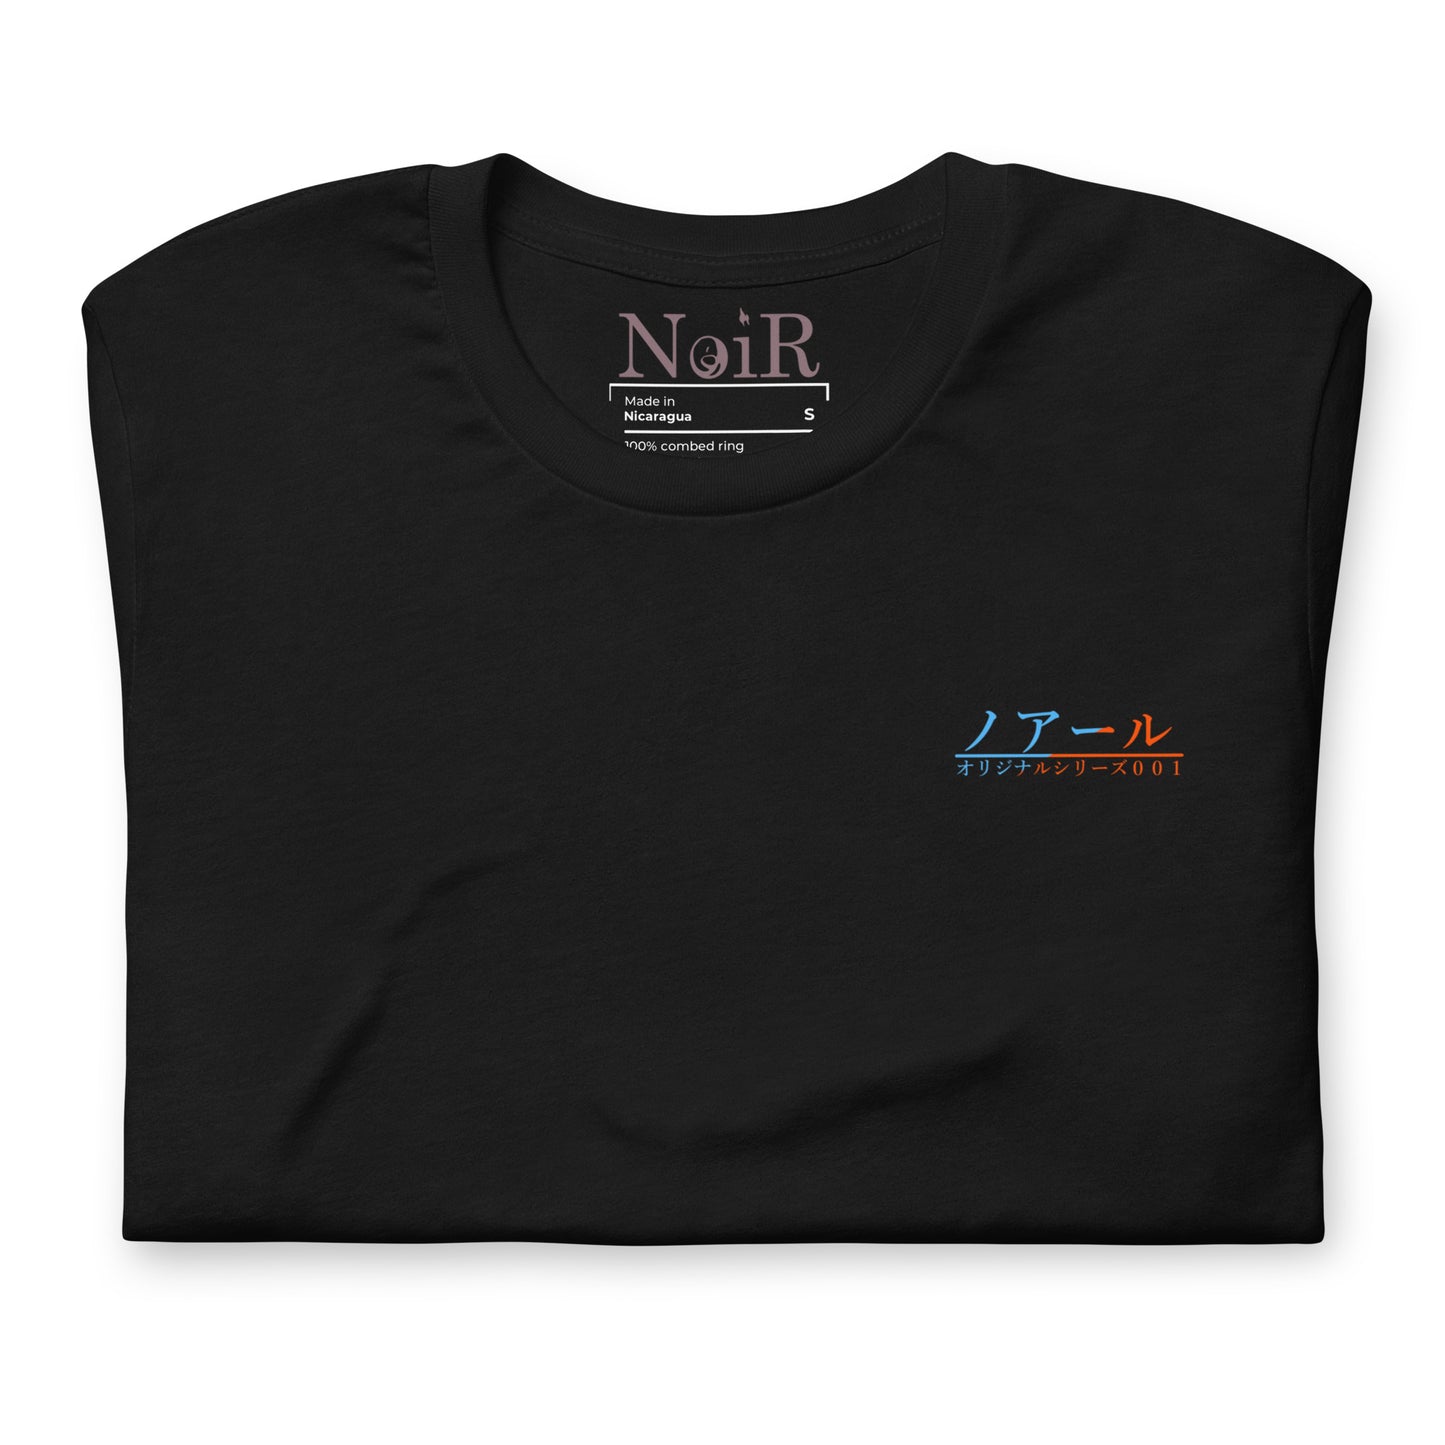 NoiR Original Series 001 "Nia" T-Shirt